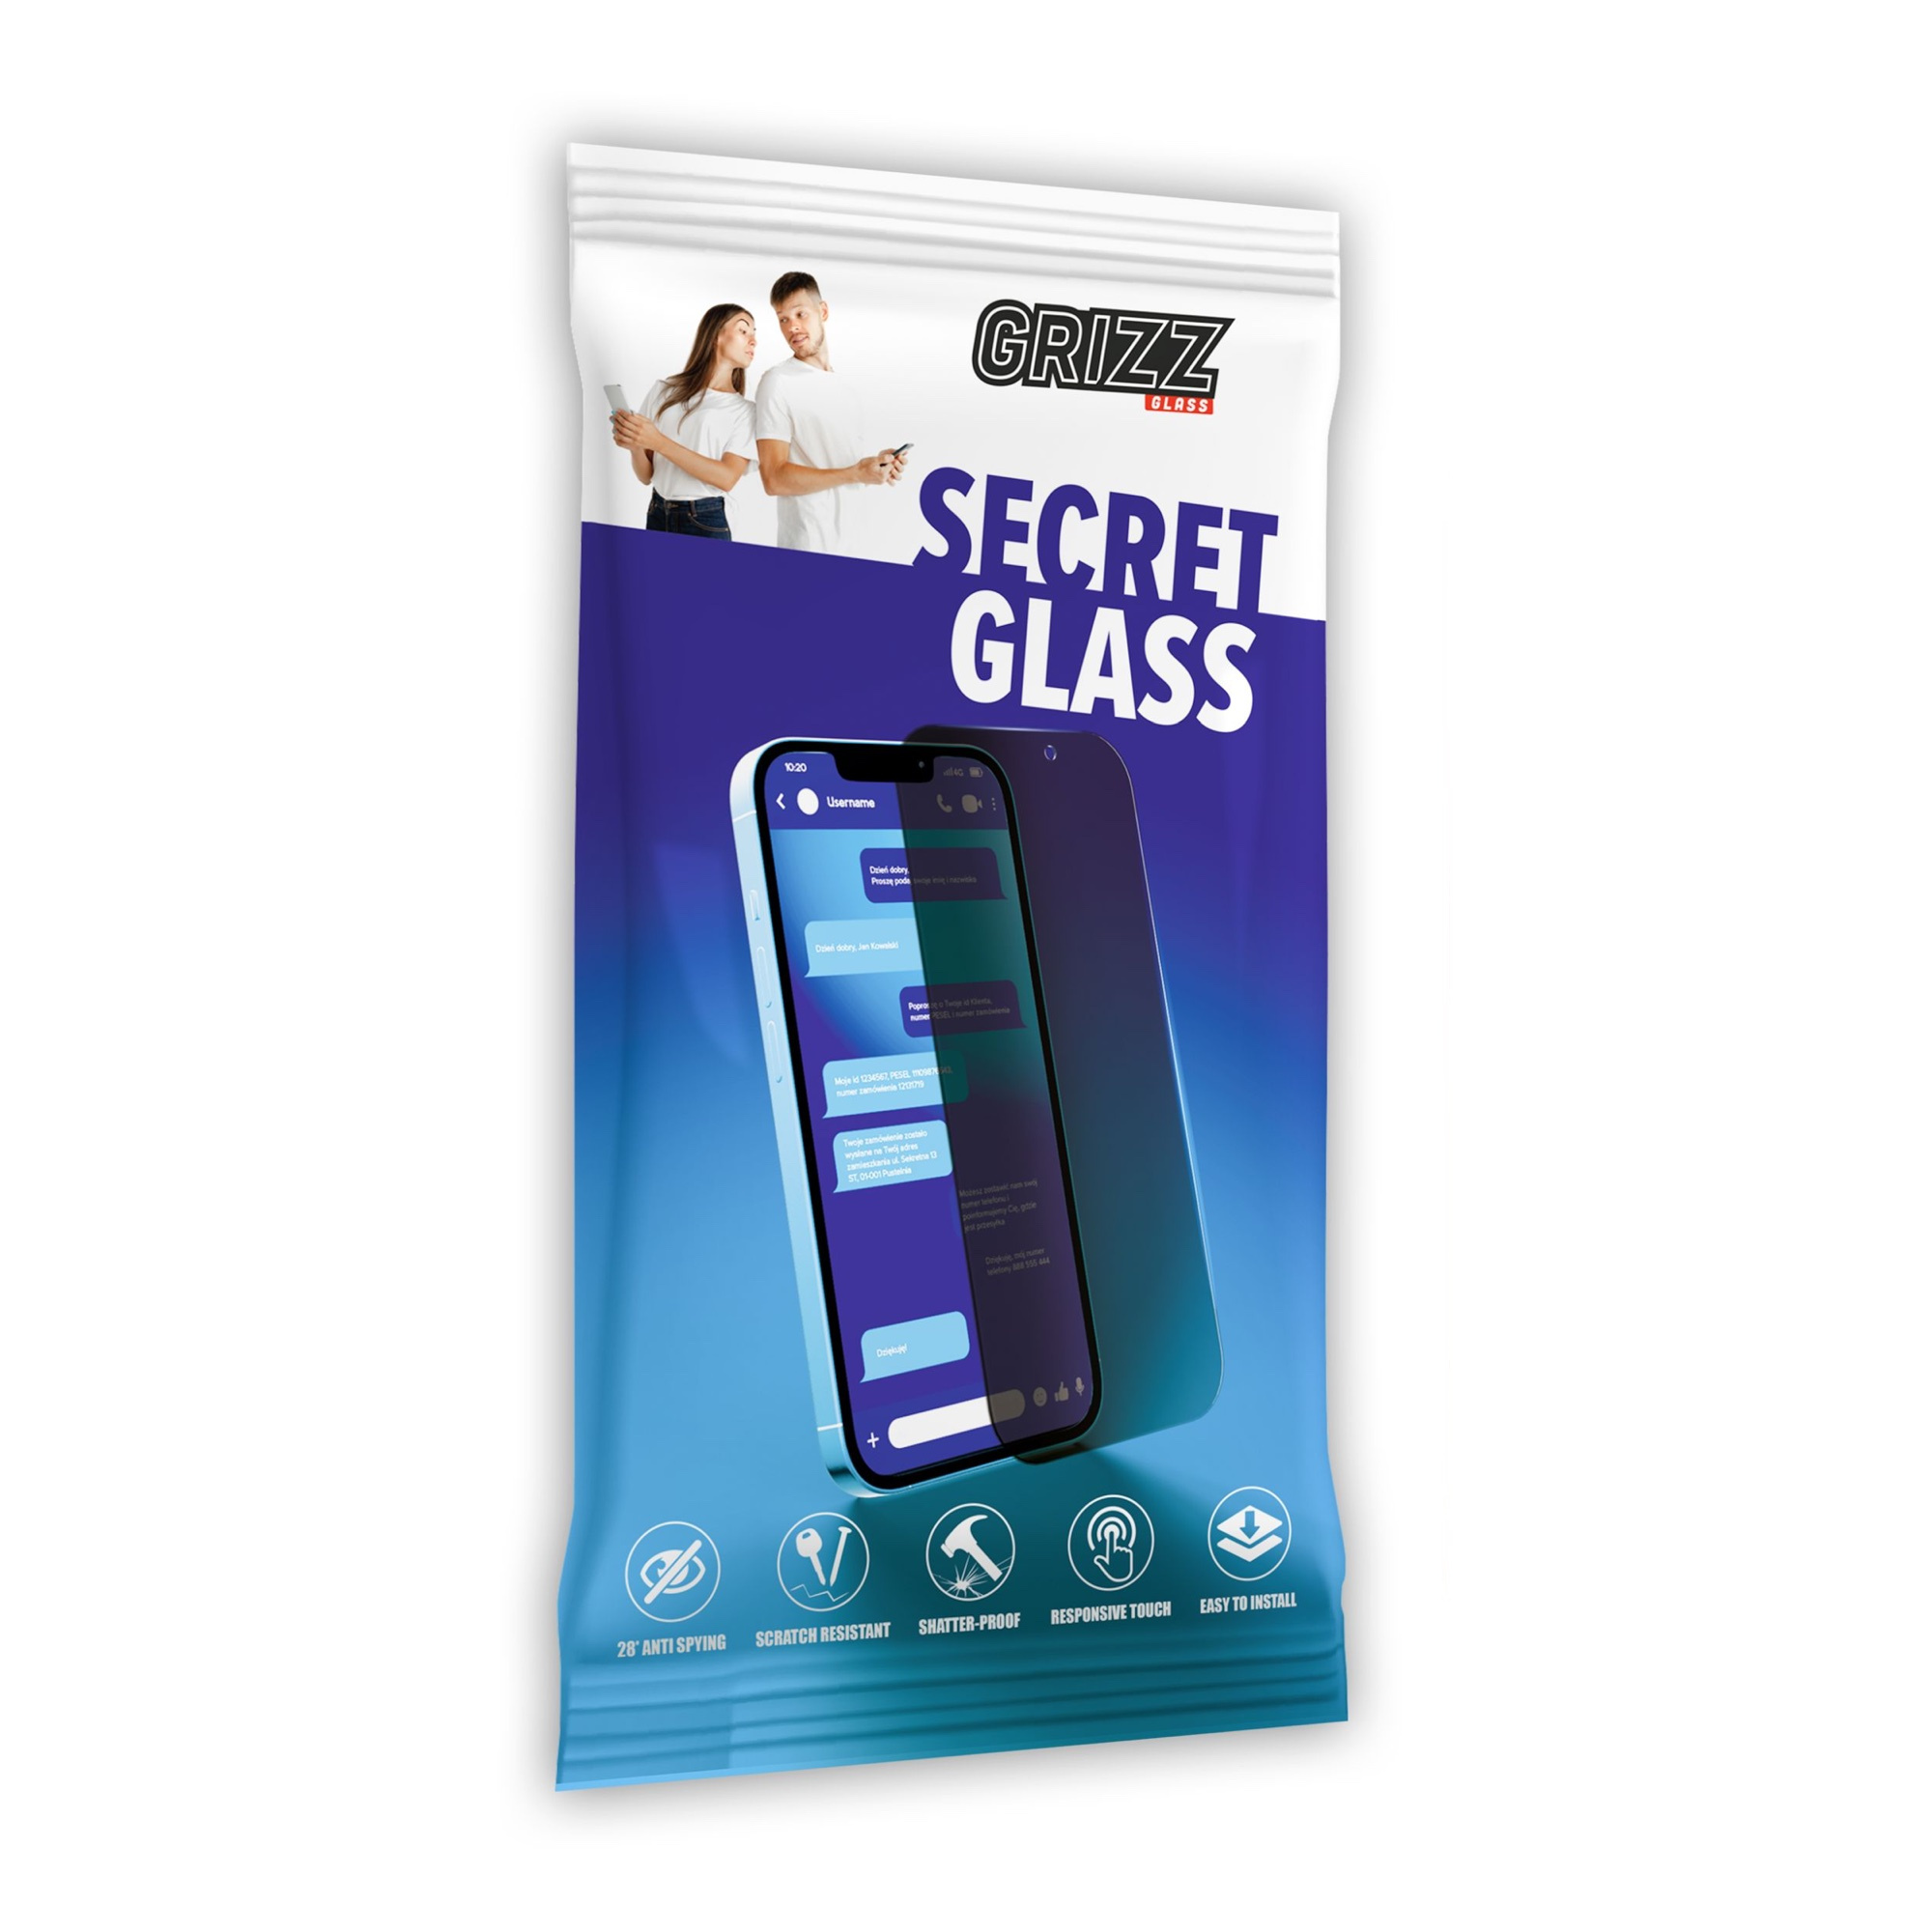 GrizzGlass SecretGlass vivo T2x